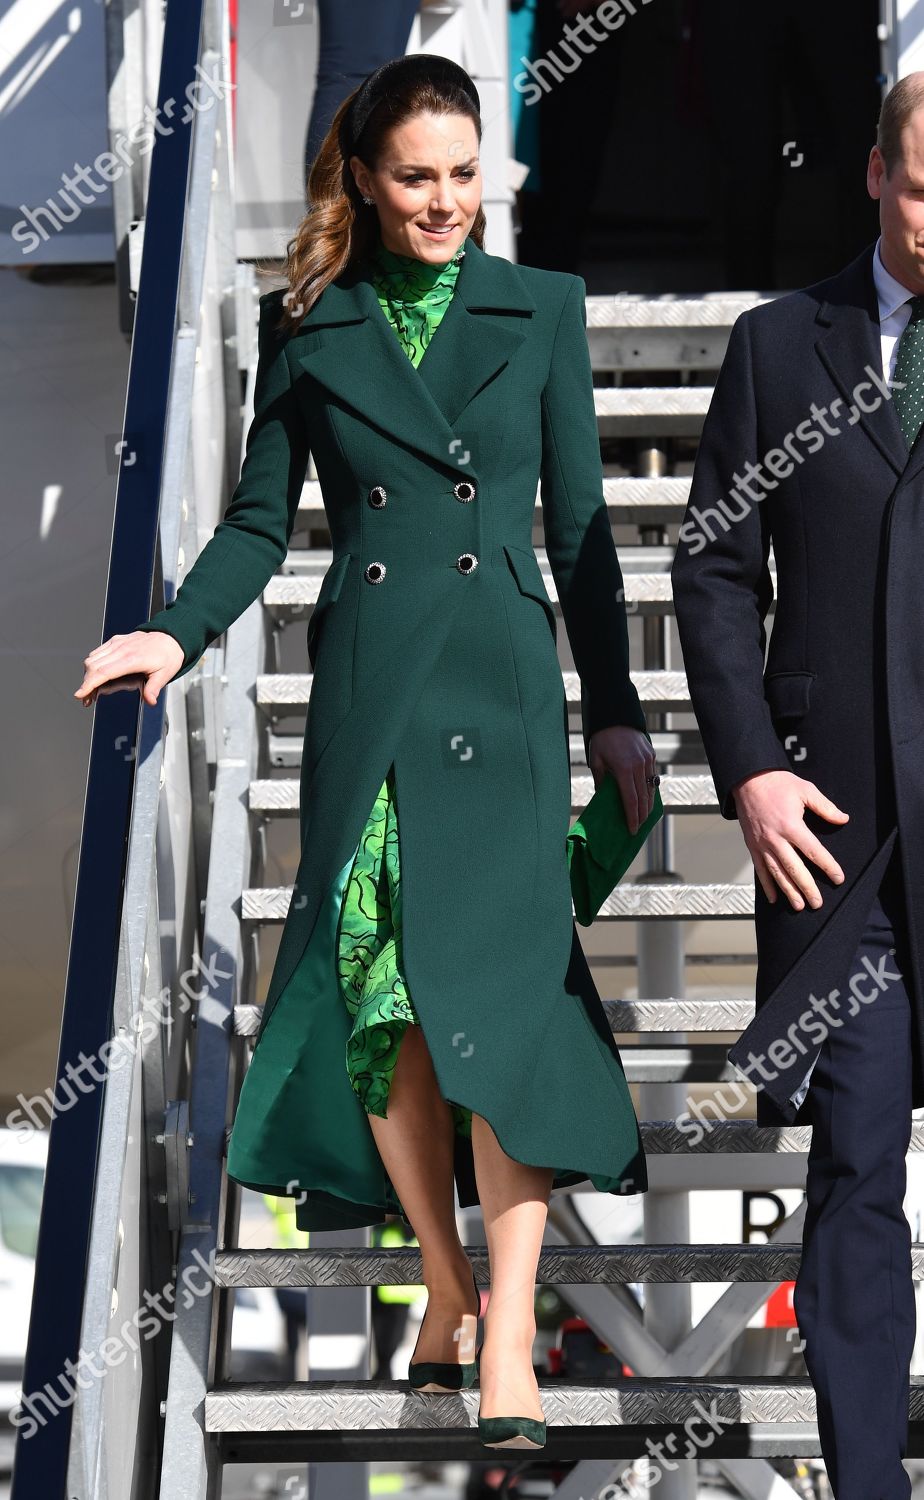 prince-william-and-catherine-duchess-of-cambridge-visit-to-ireland-shutterstock-editorial-10573047k.jpg